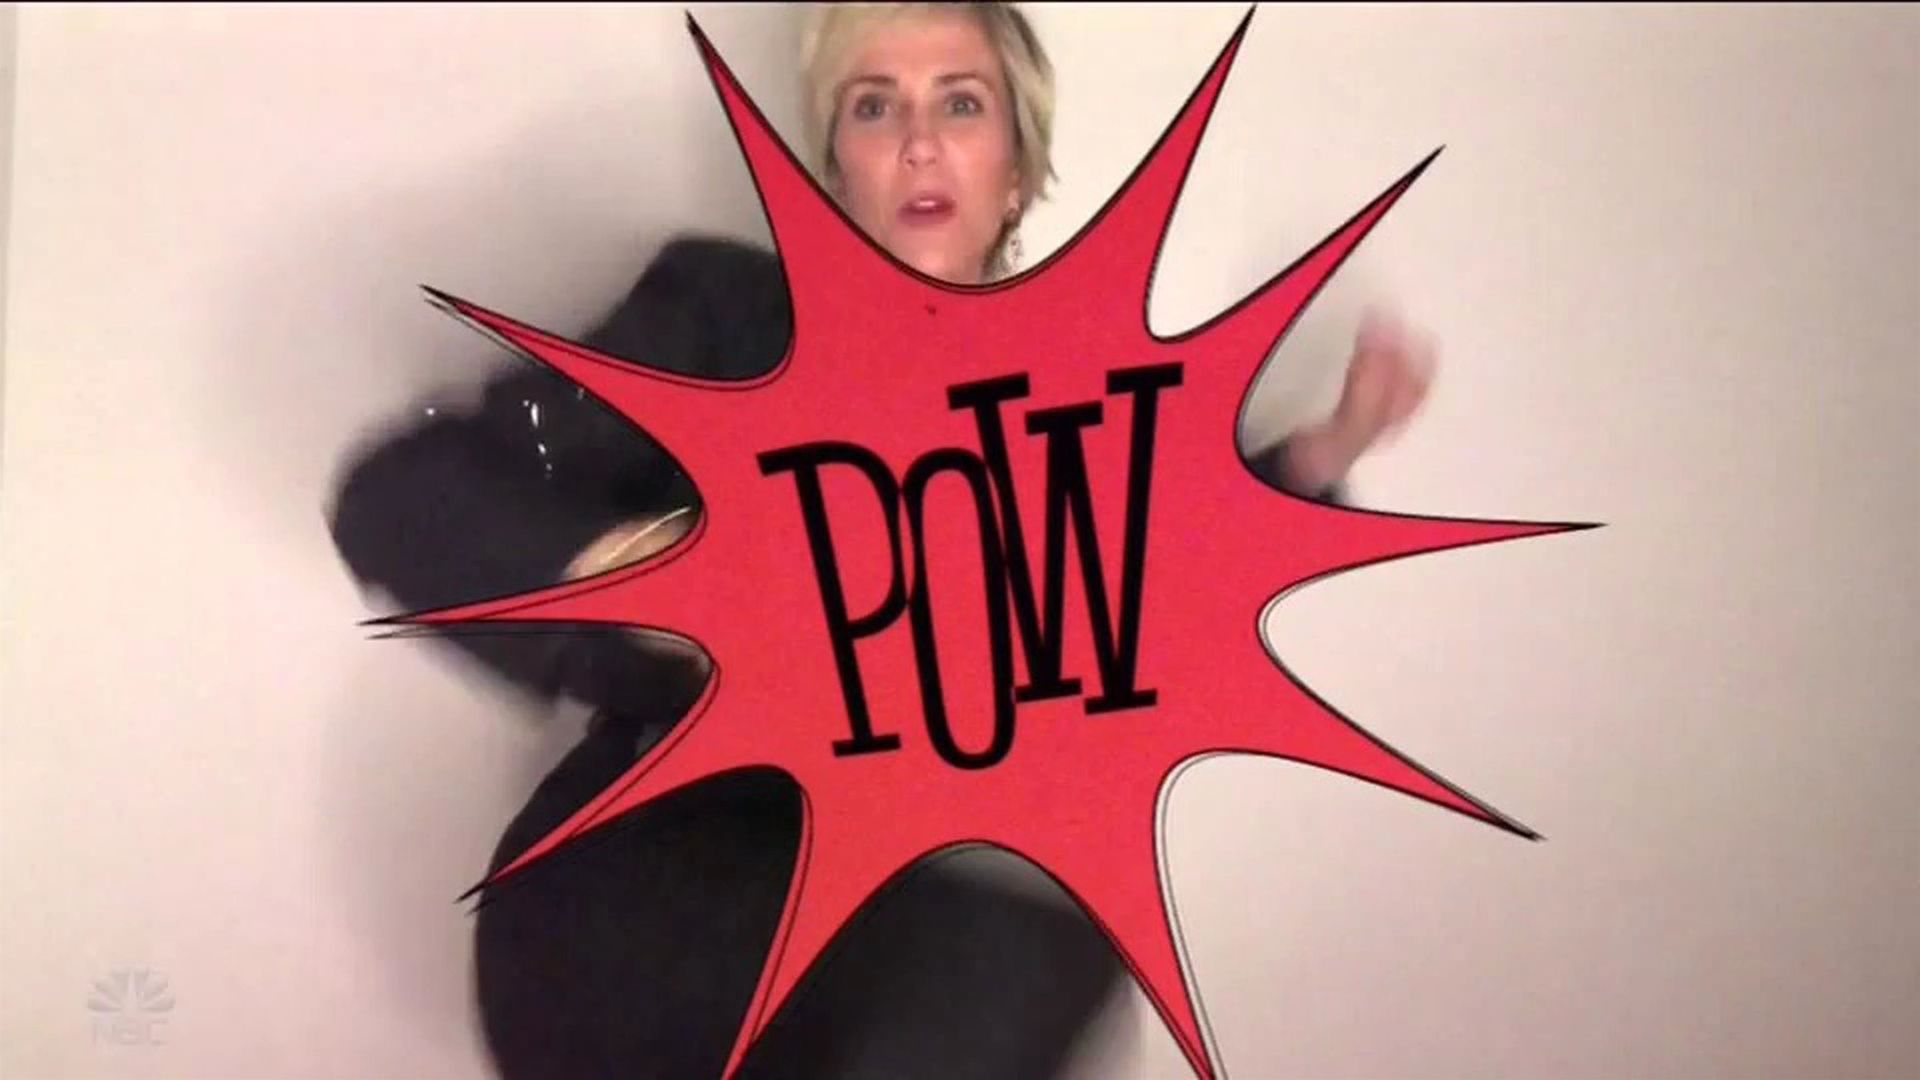 Kristen Wiig Flas
hes Her Boobs (27 Pics+ Video)